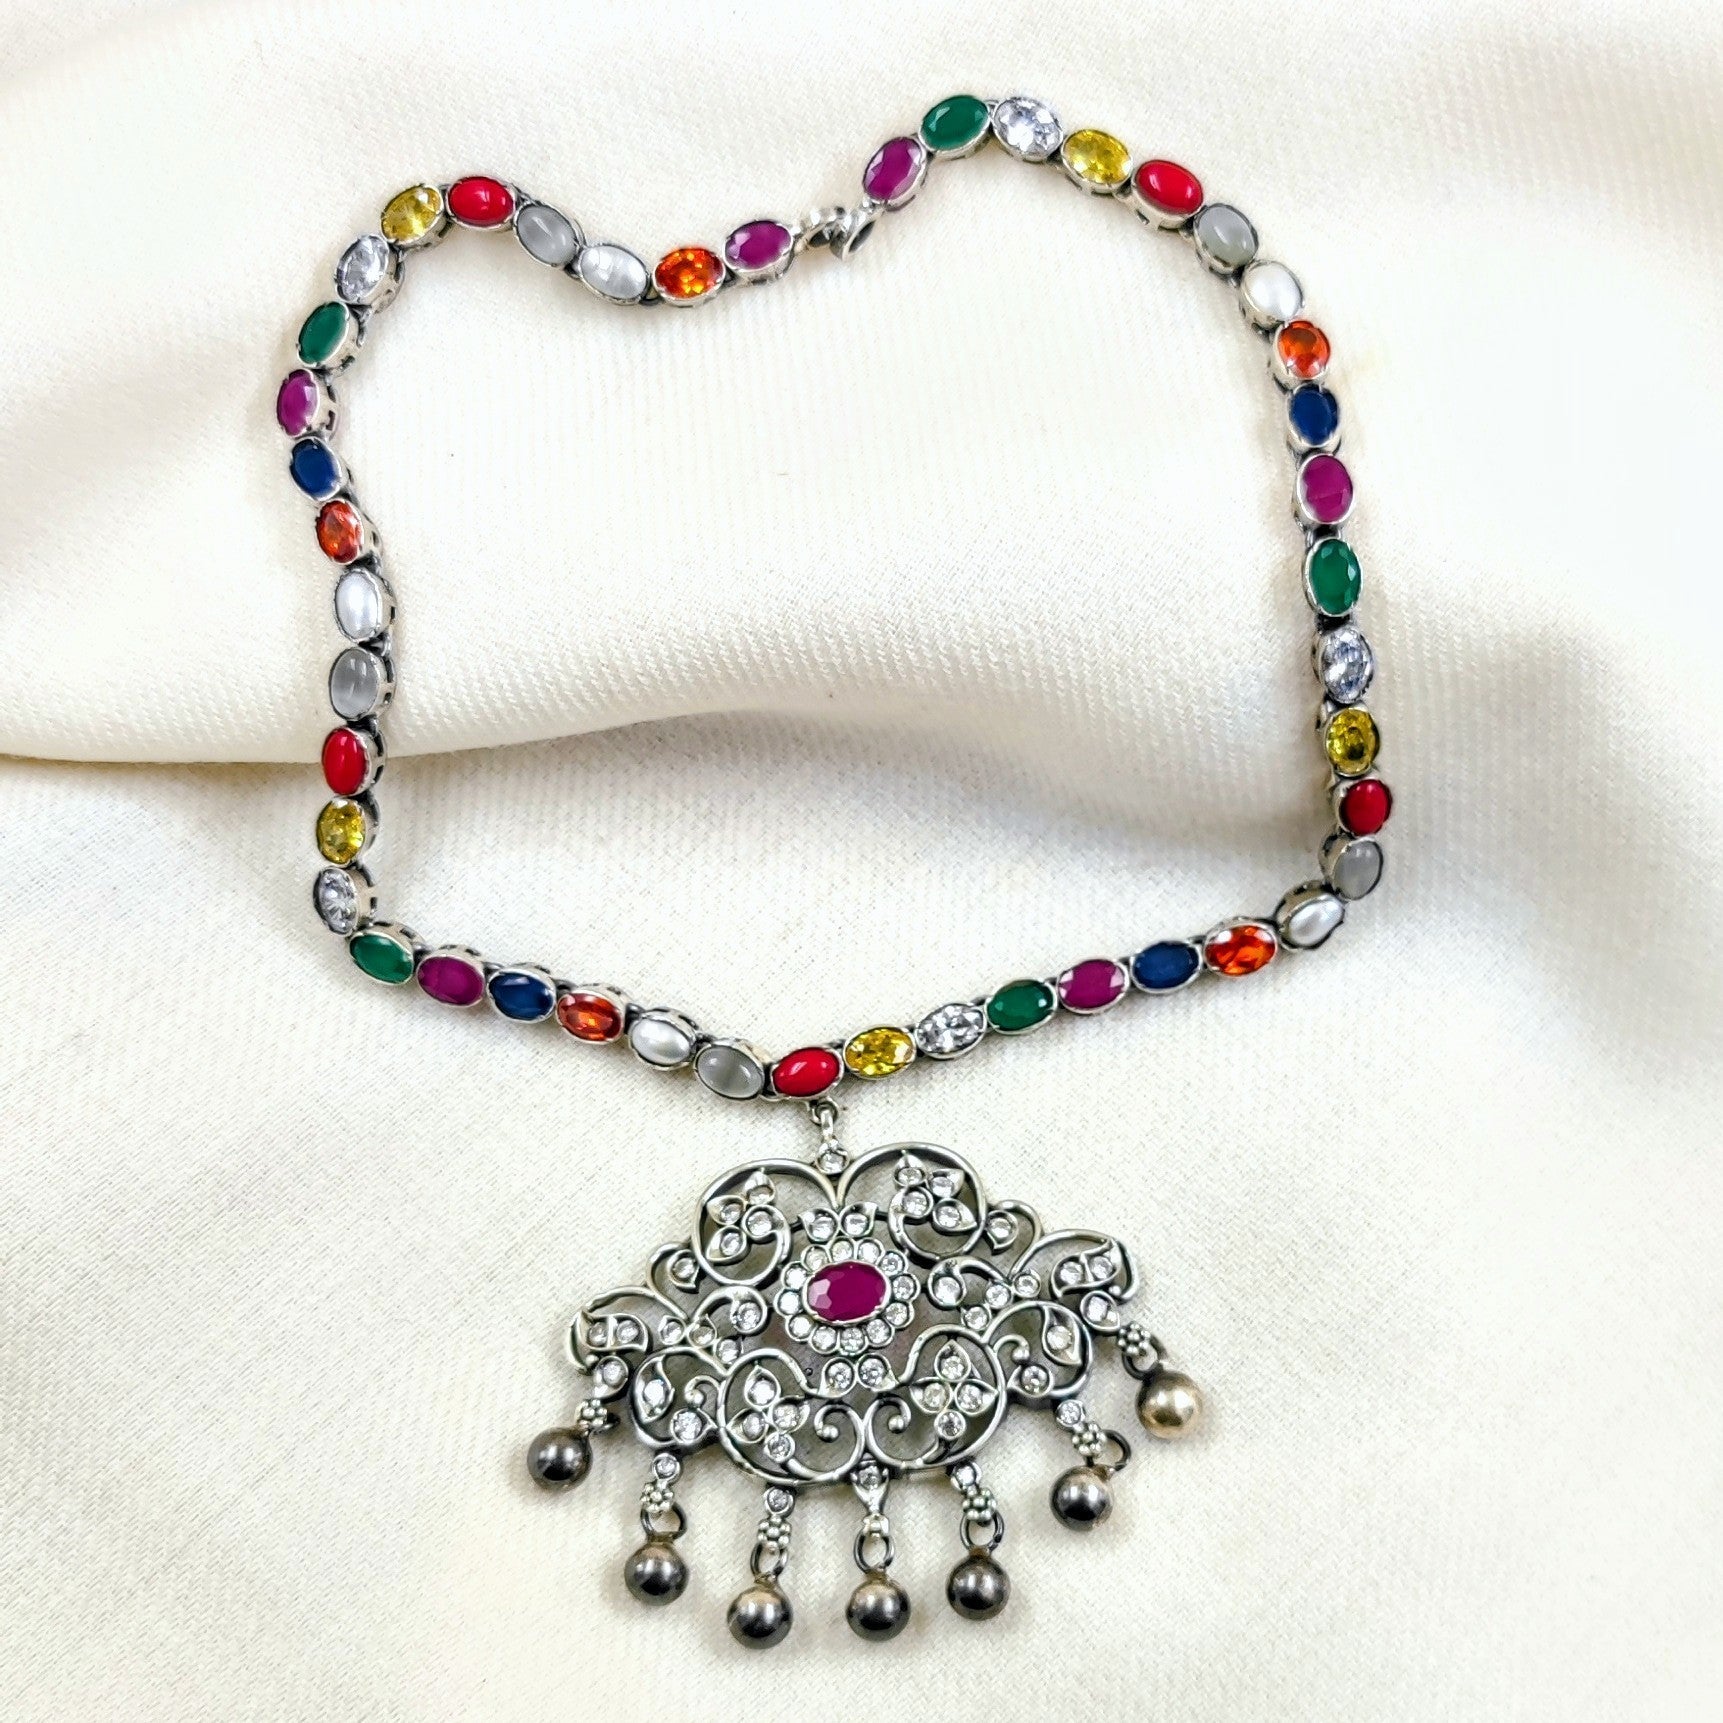 Sterling Silver Jewelry Necklace by Jauhri 92.5 Silver - Navratna Ragini Necklace